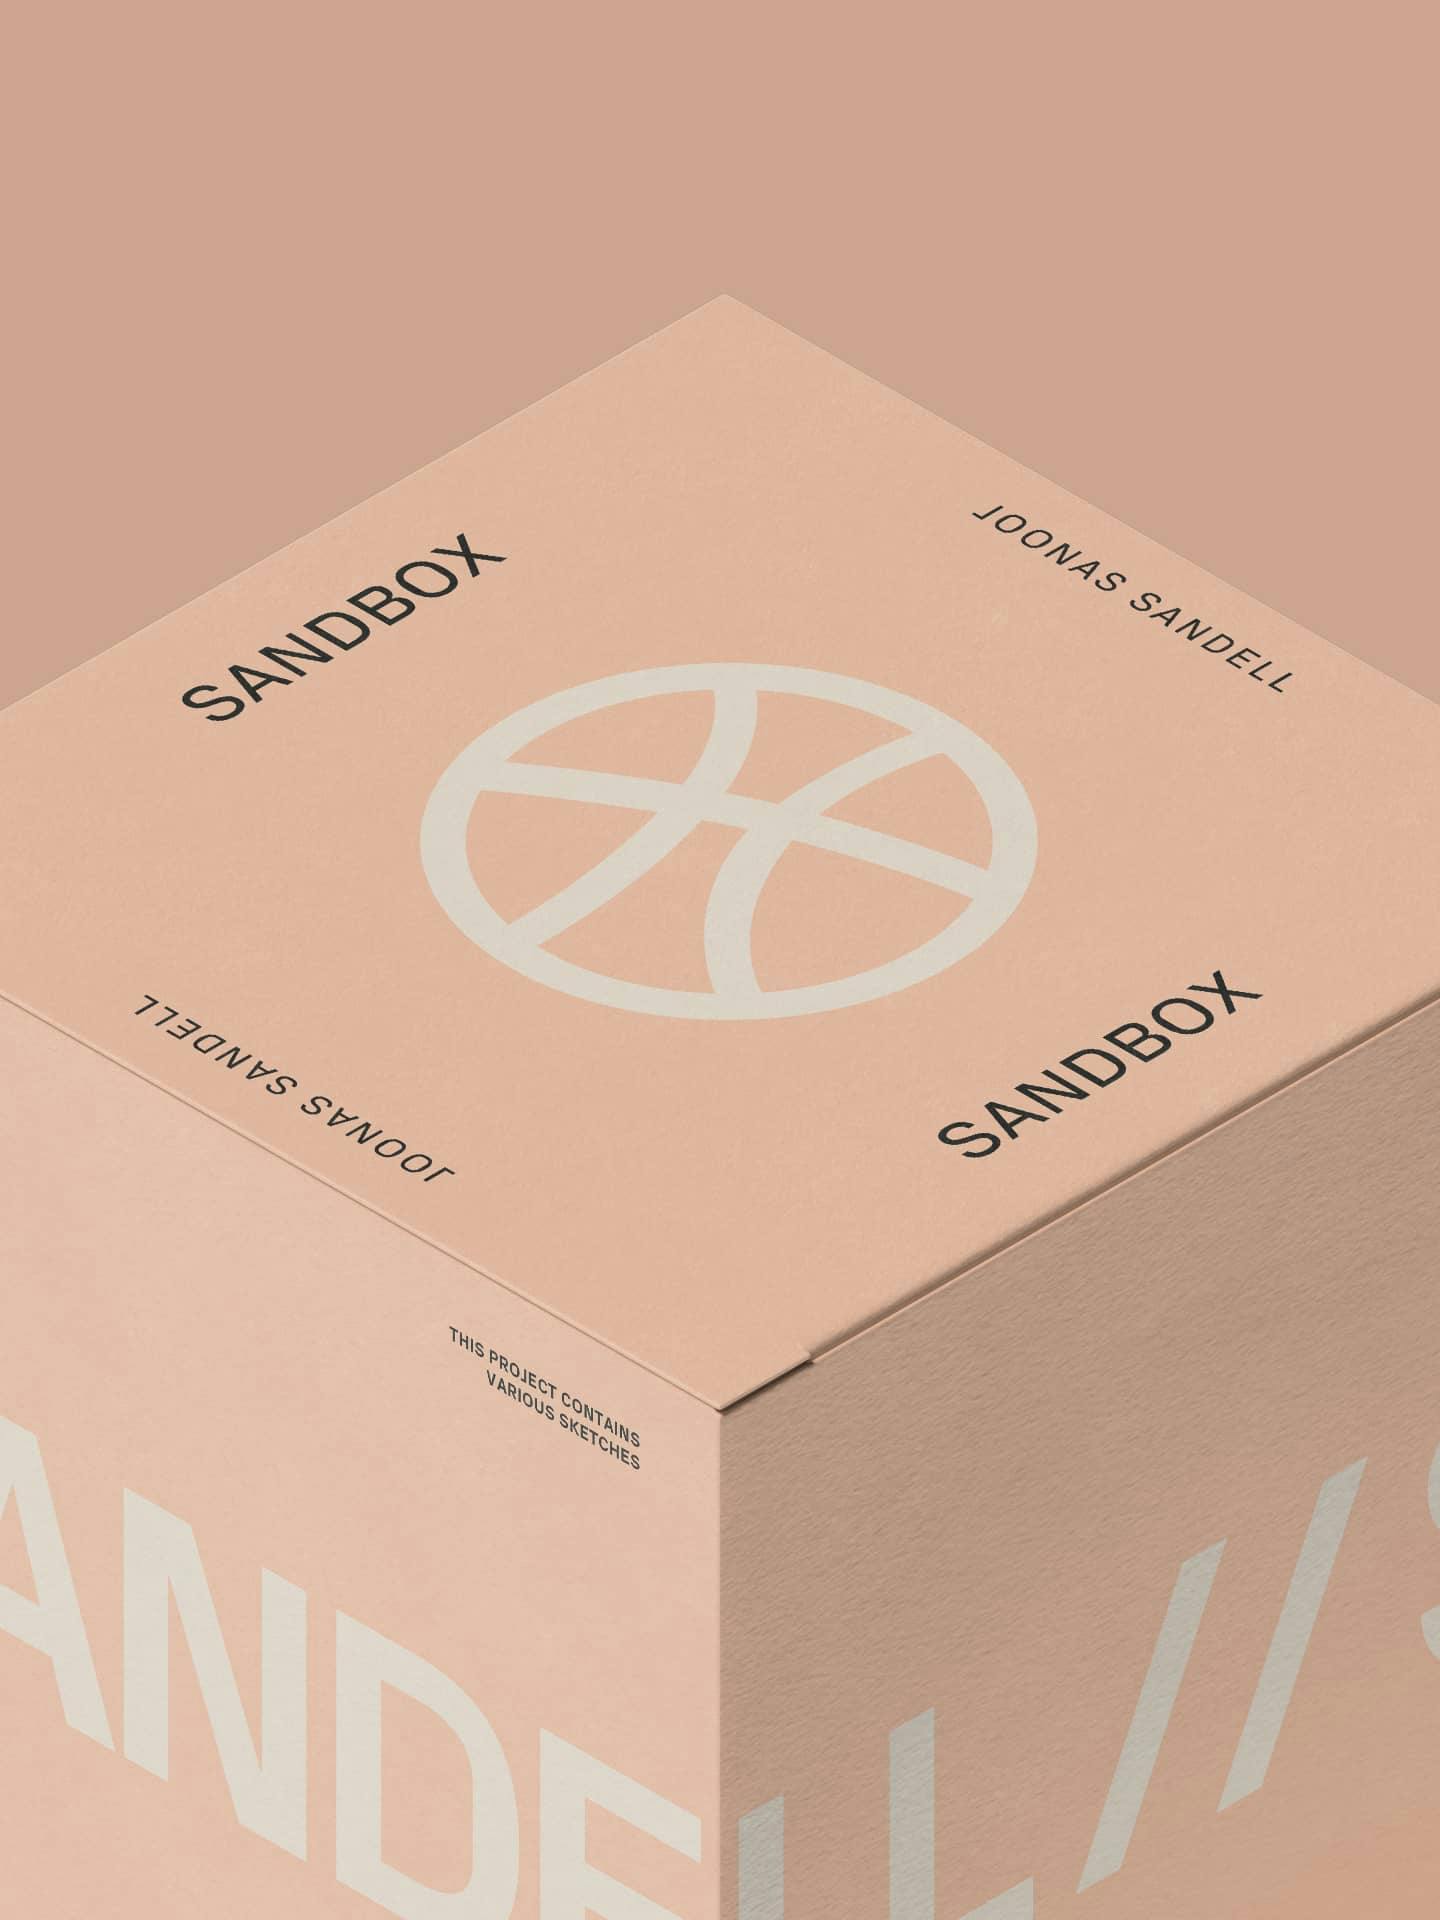 Next Project: Sandbox